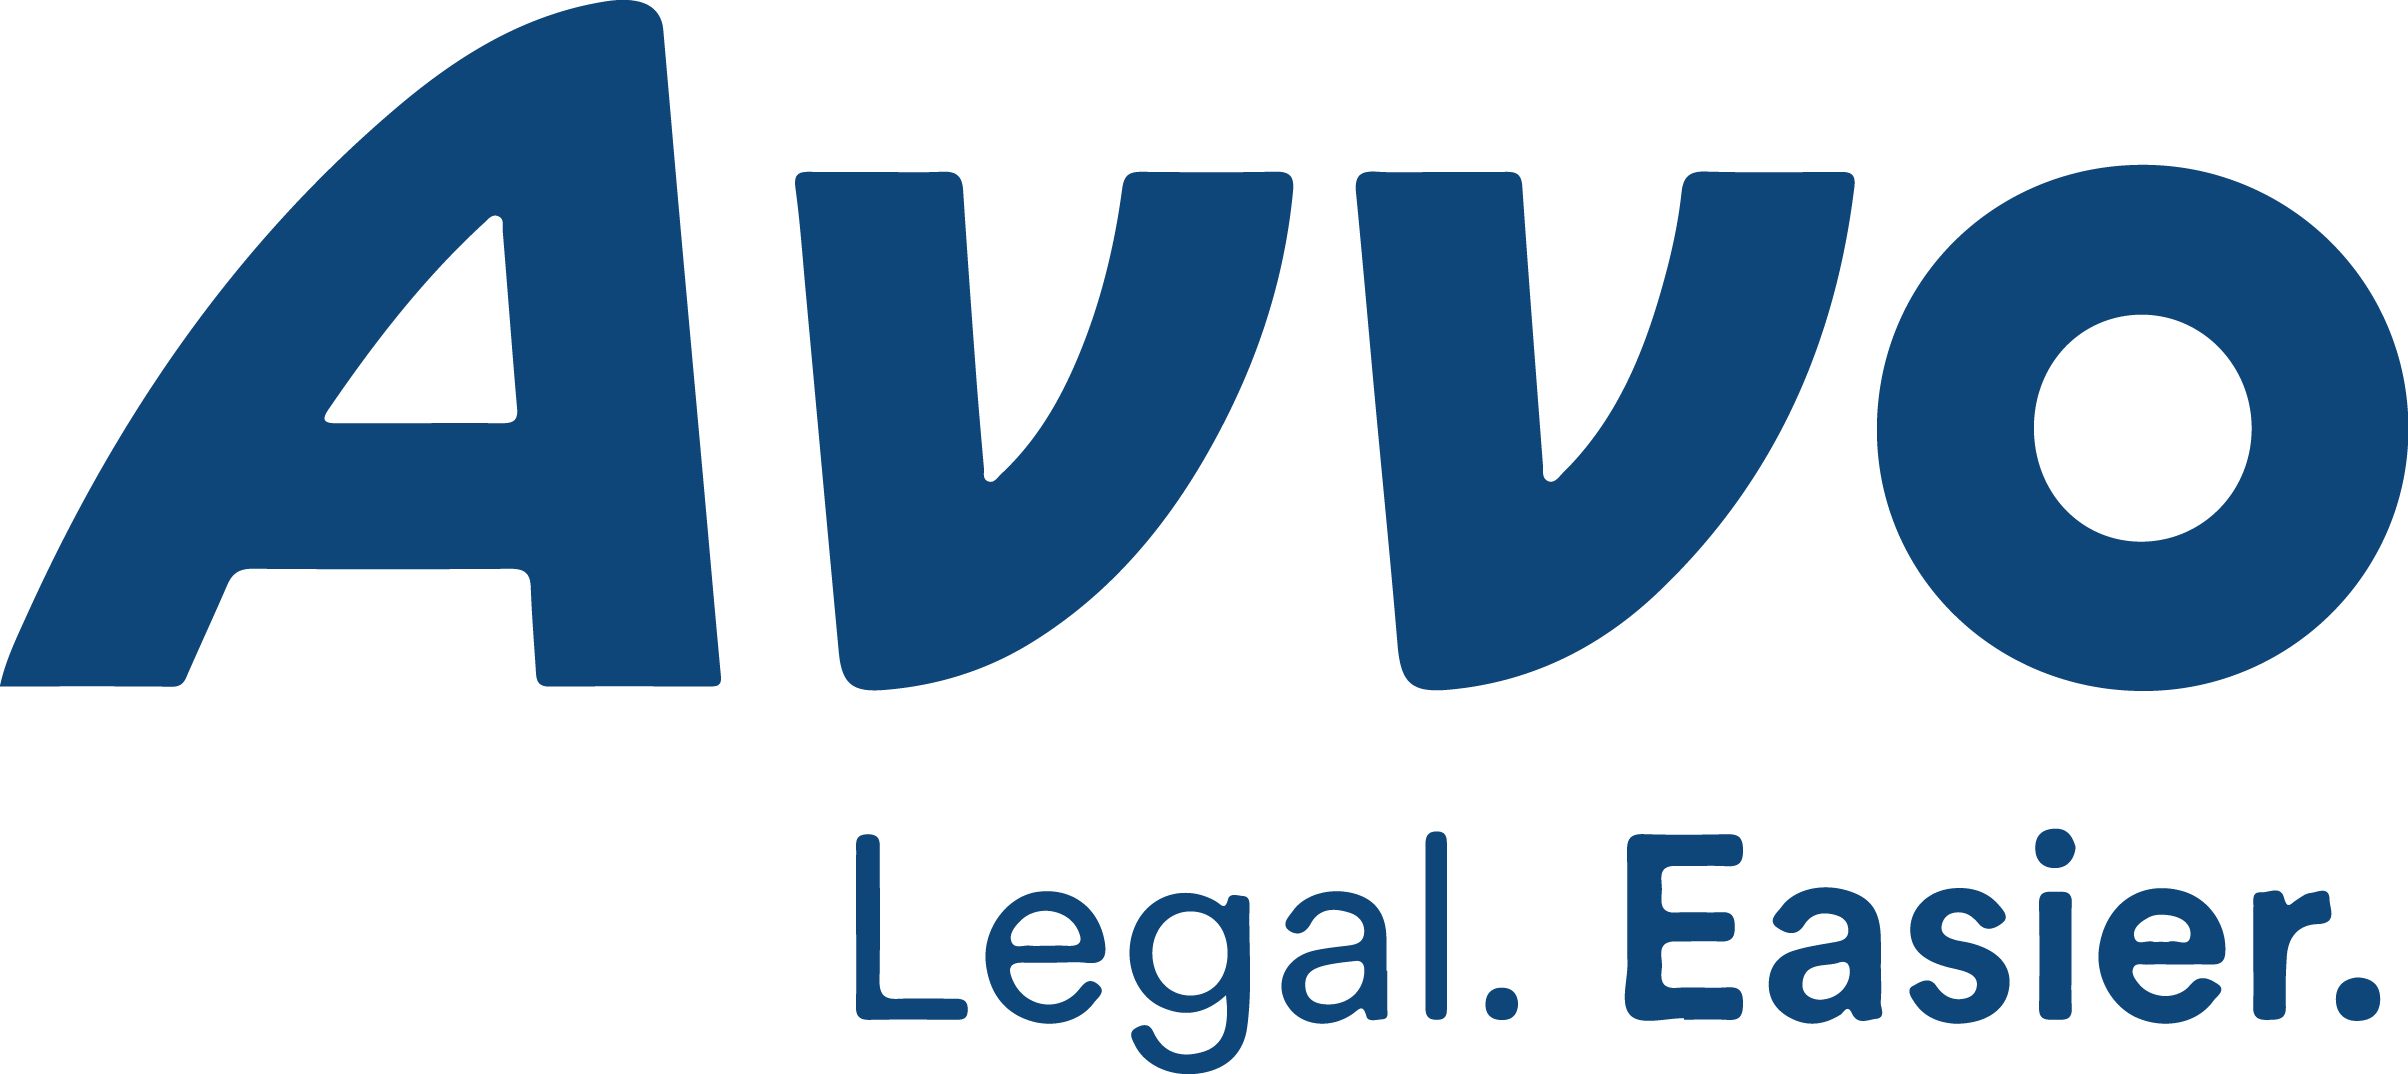 avvo_logo_navy_tagline